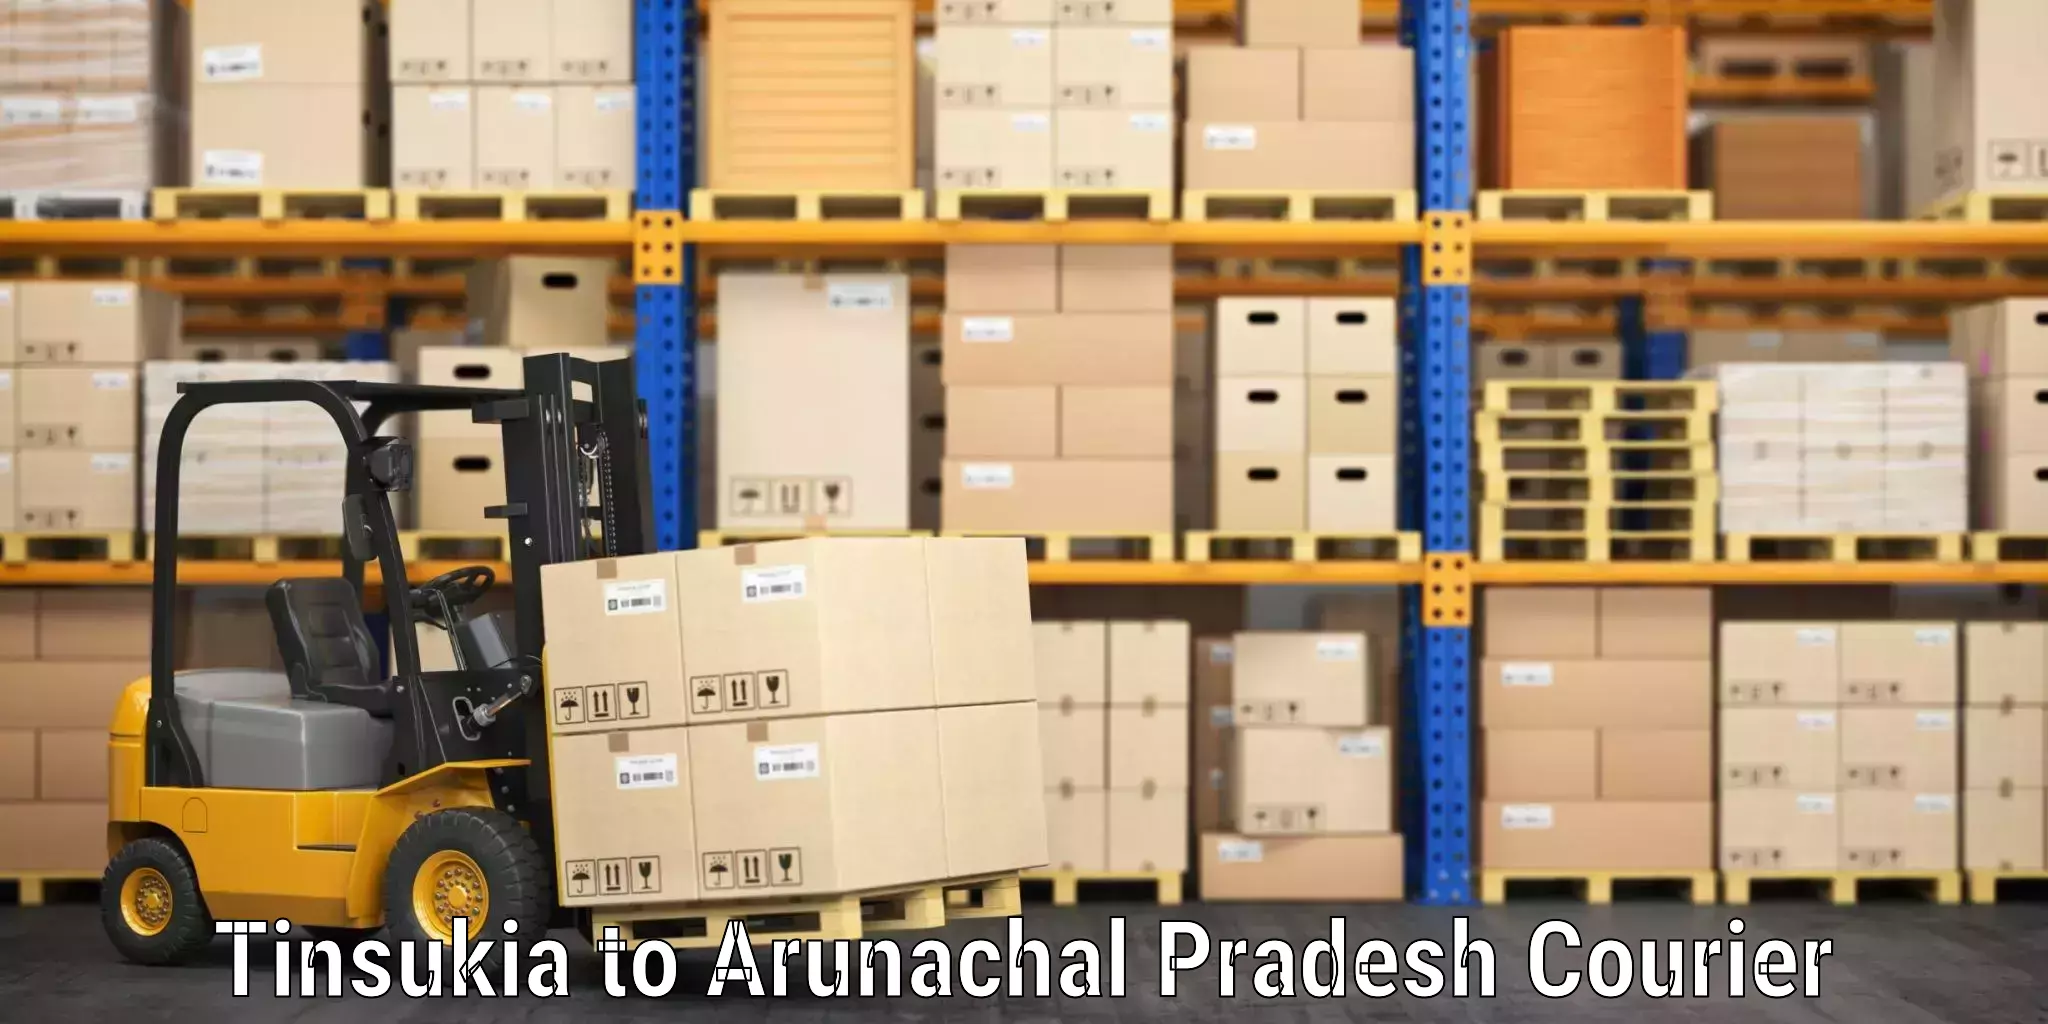 Luggage delivery network Tinsukia to Arunachal Pradesh